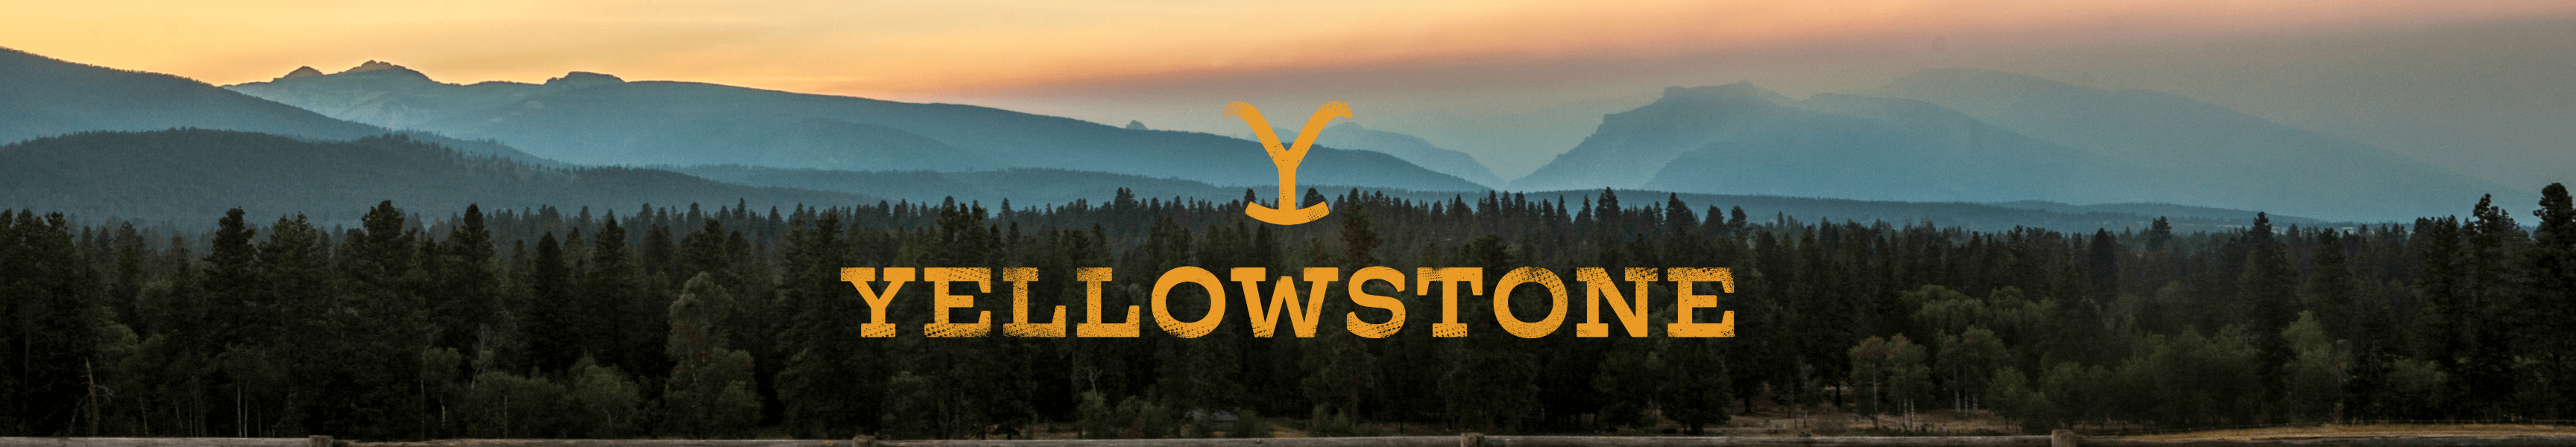 Calcetines de Yellowstone